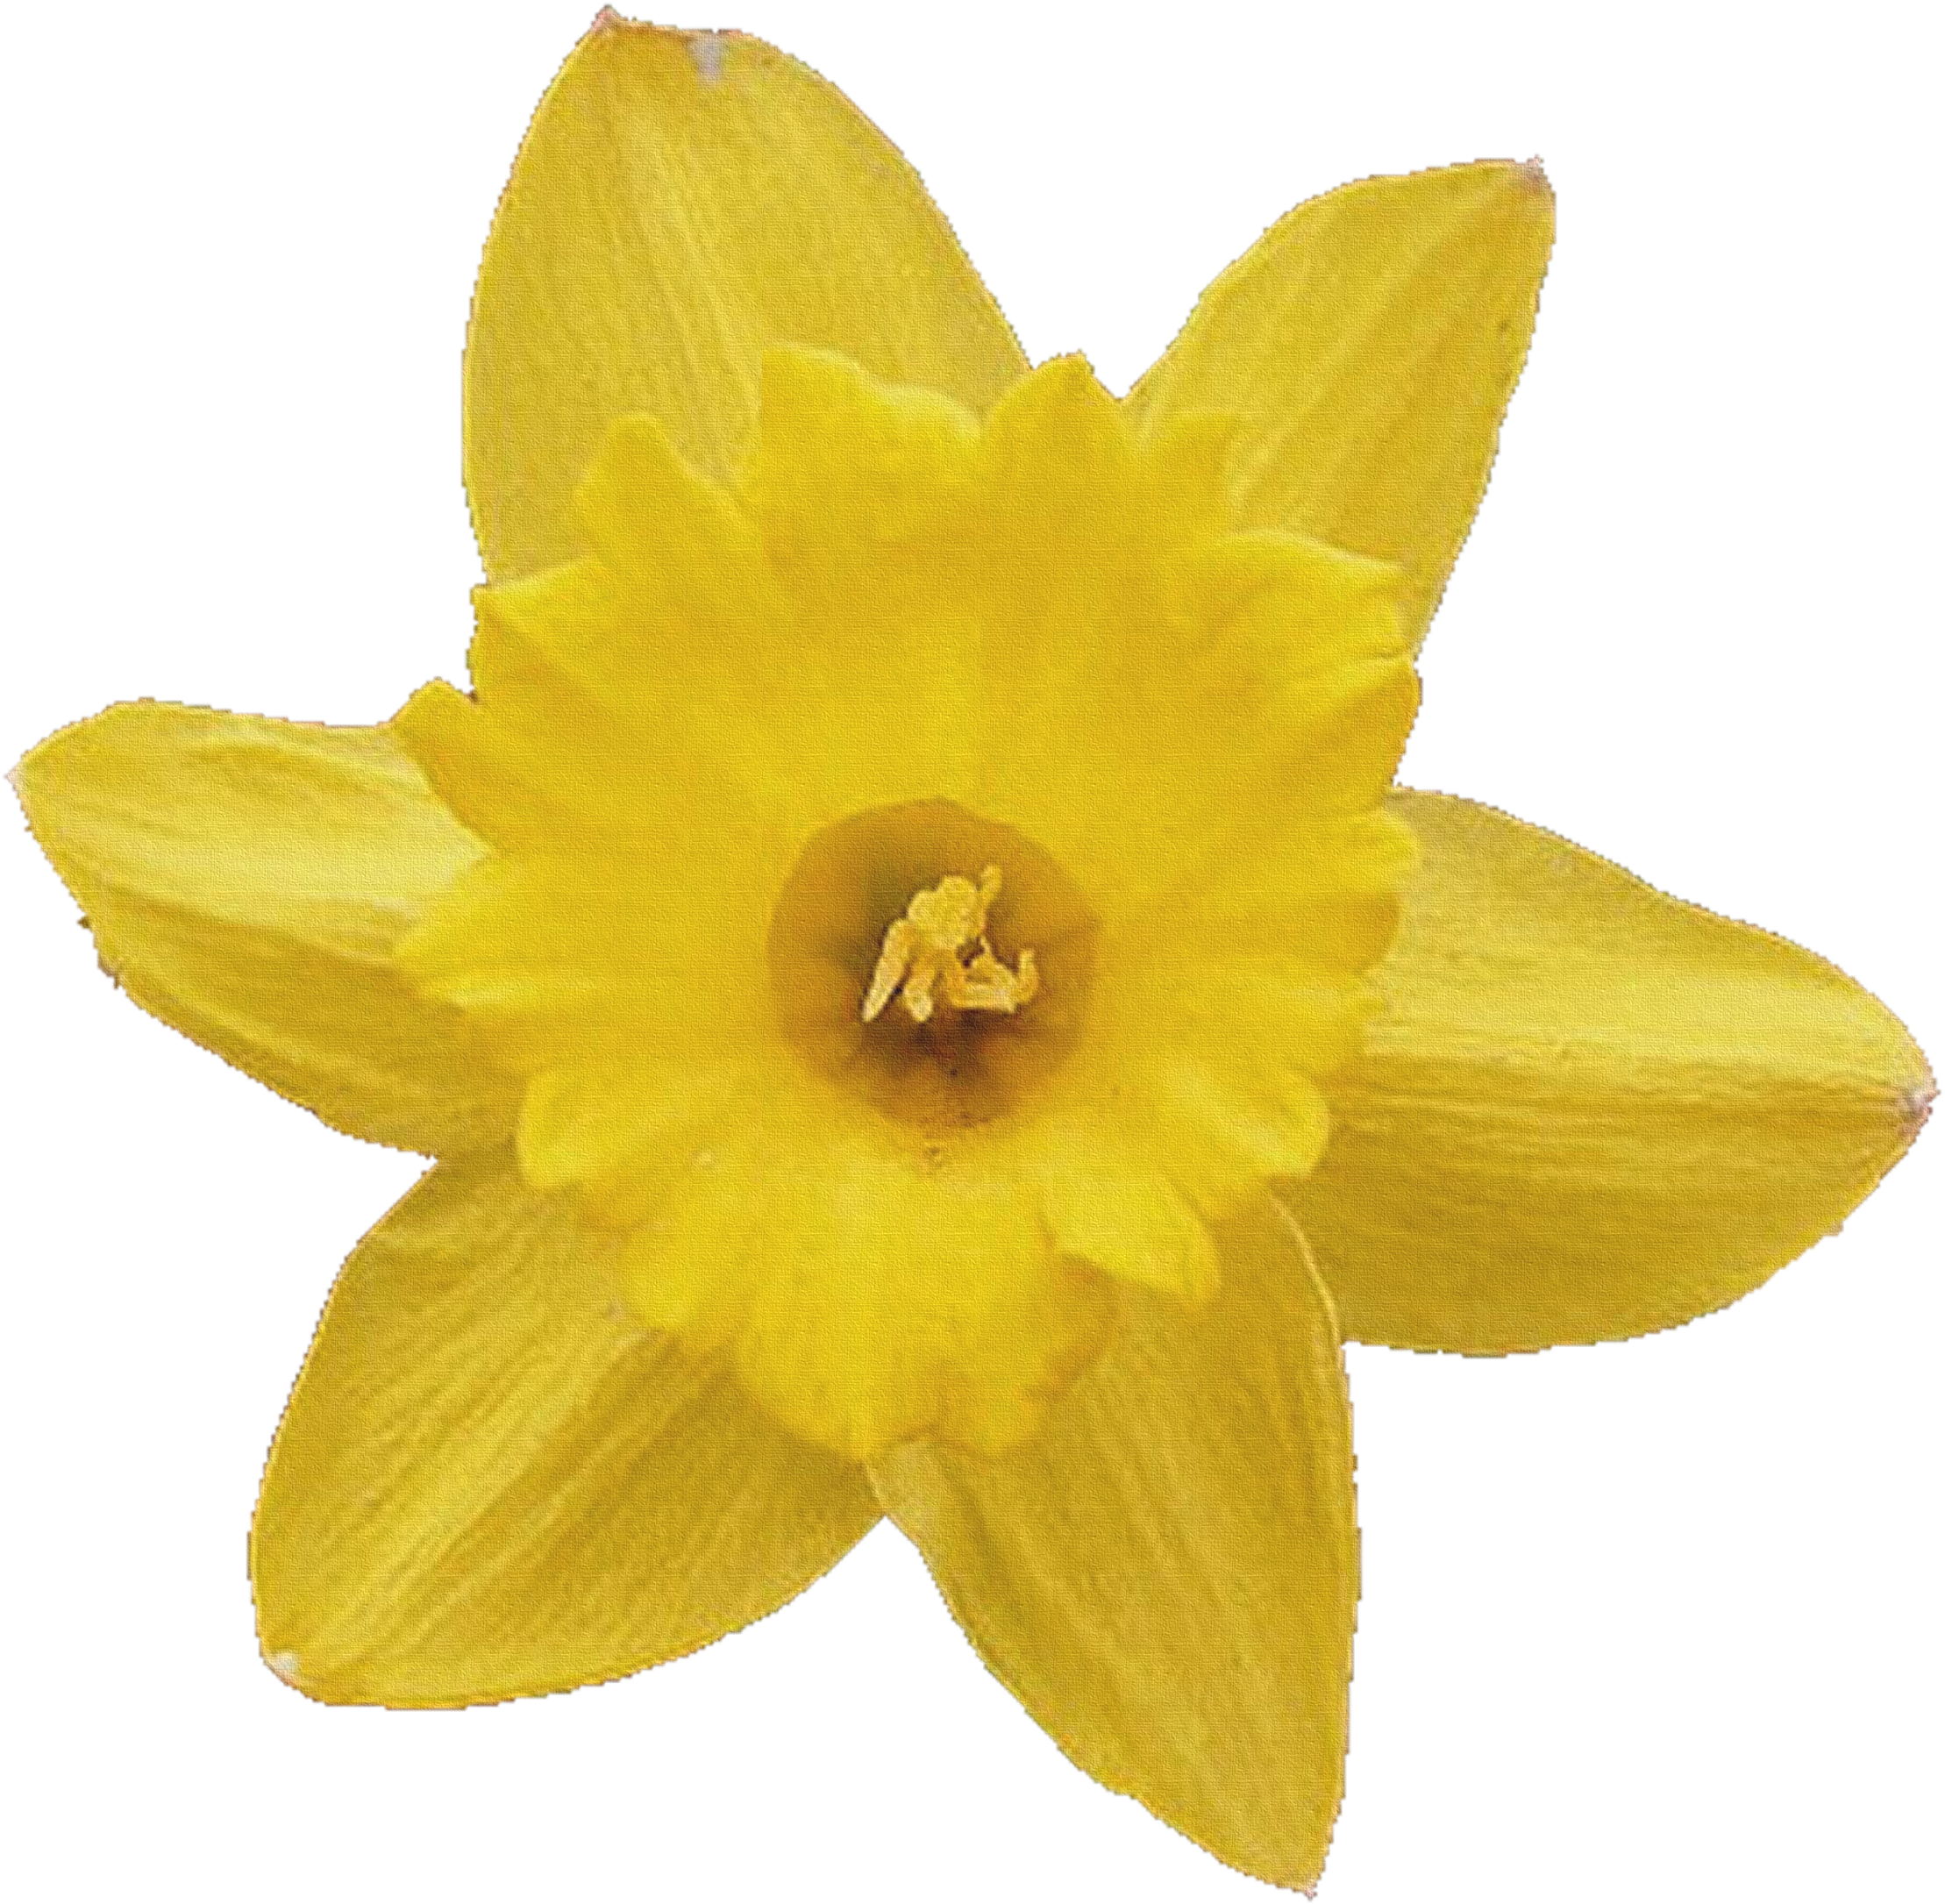 1 - Daffodil (2364x2364)